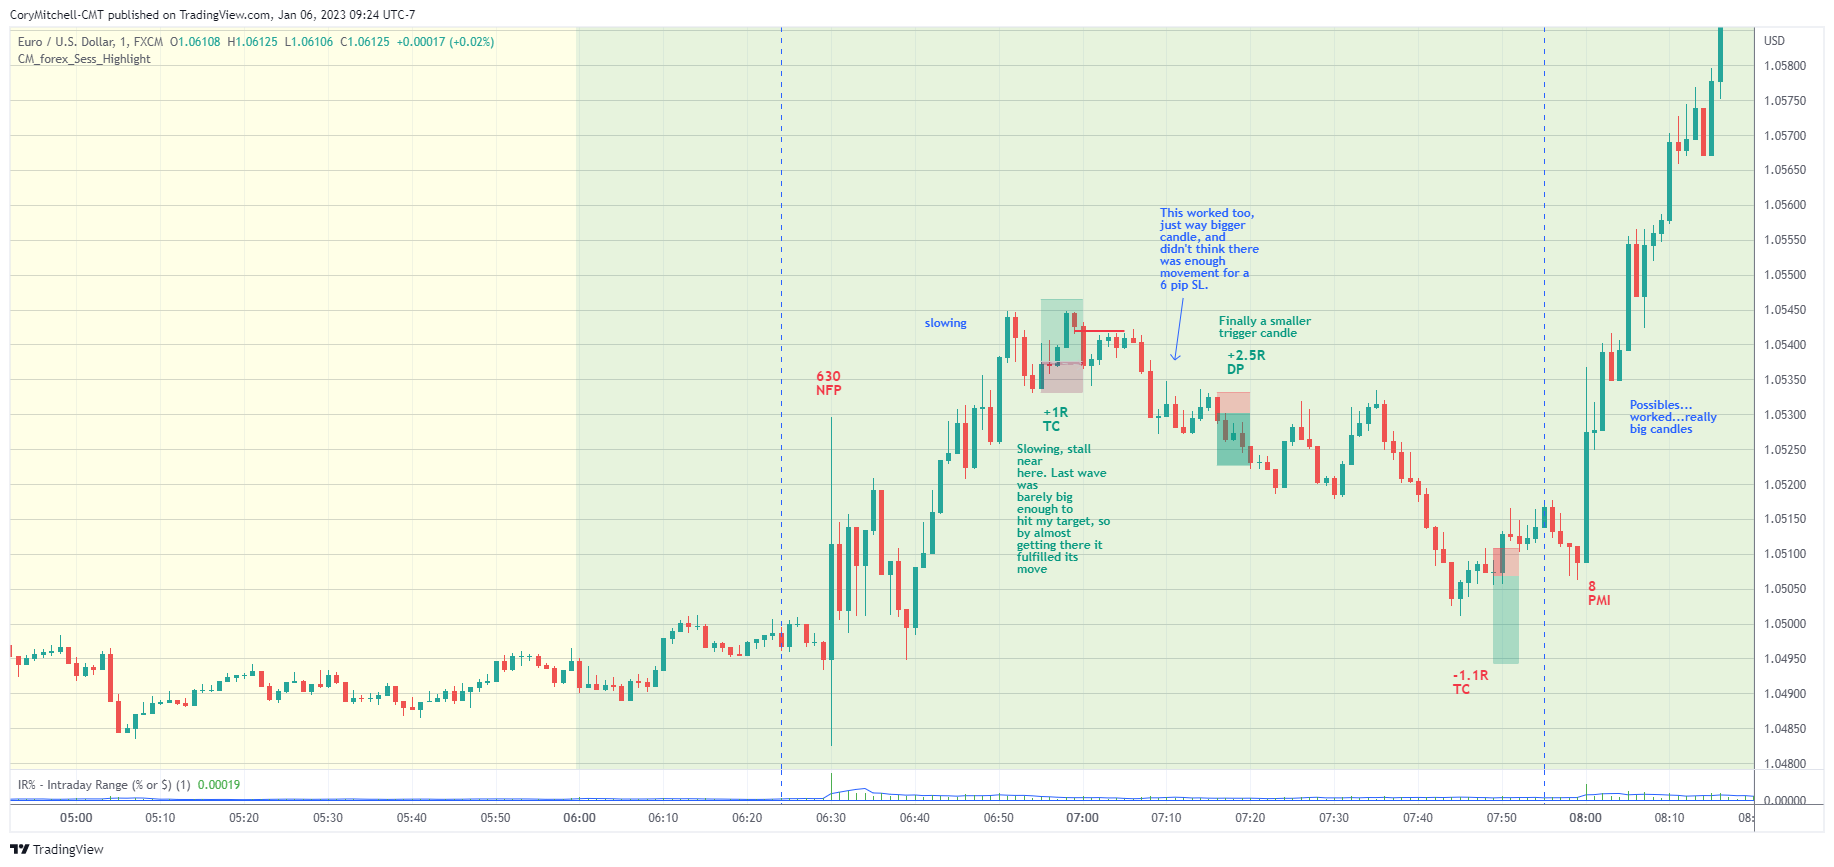 Double pump strategy on EURUSD 1 minute chart